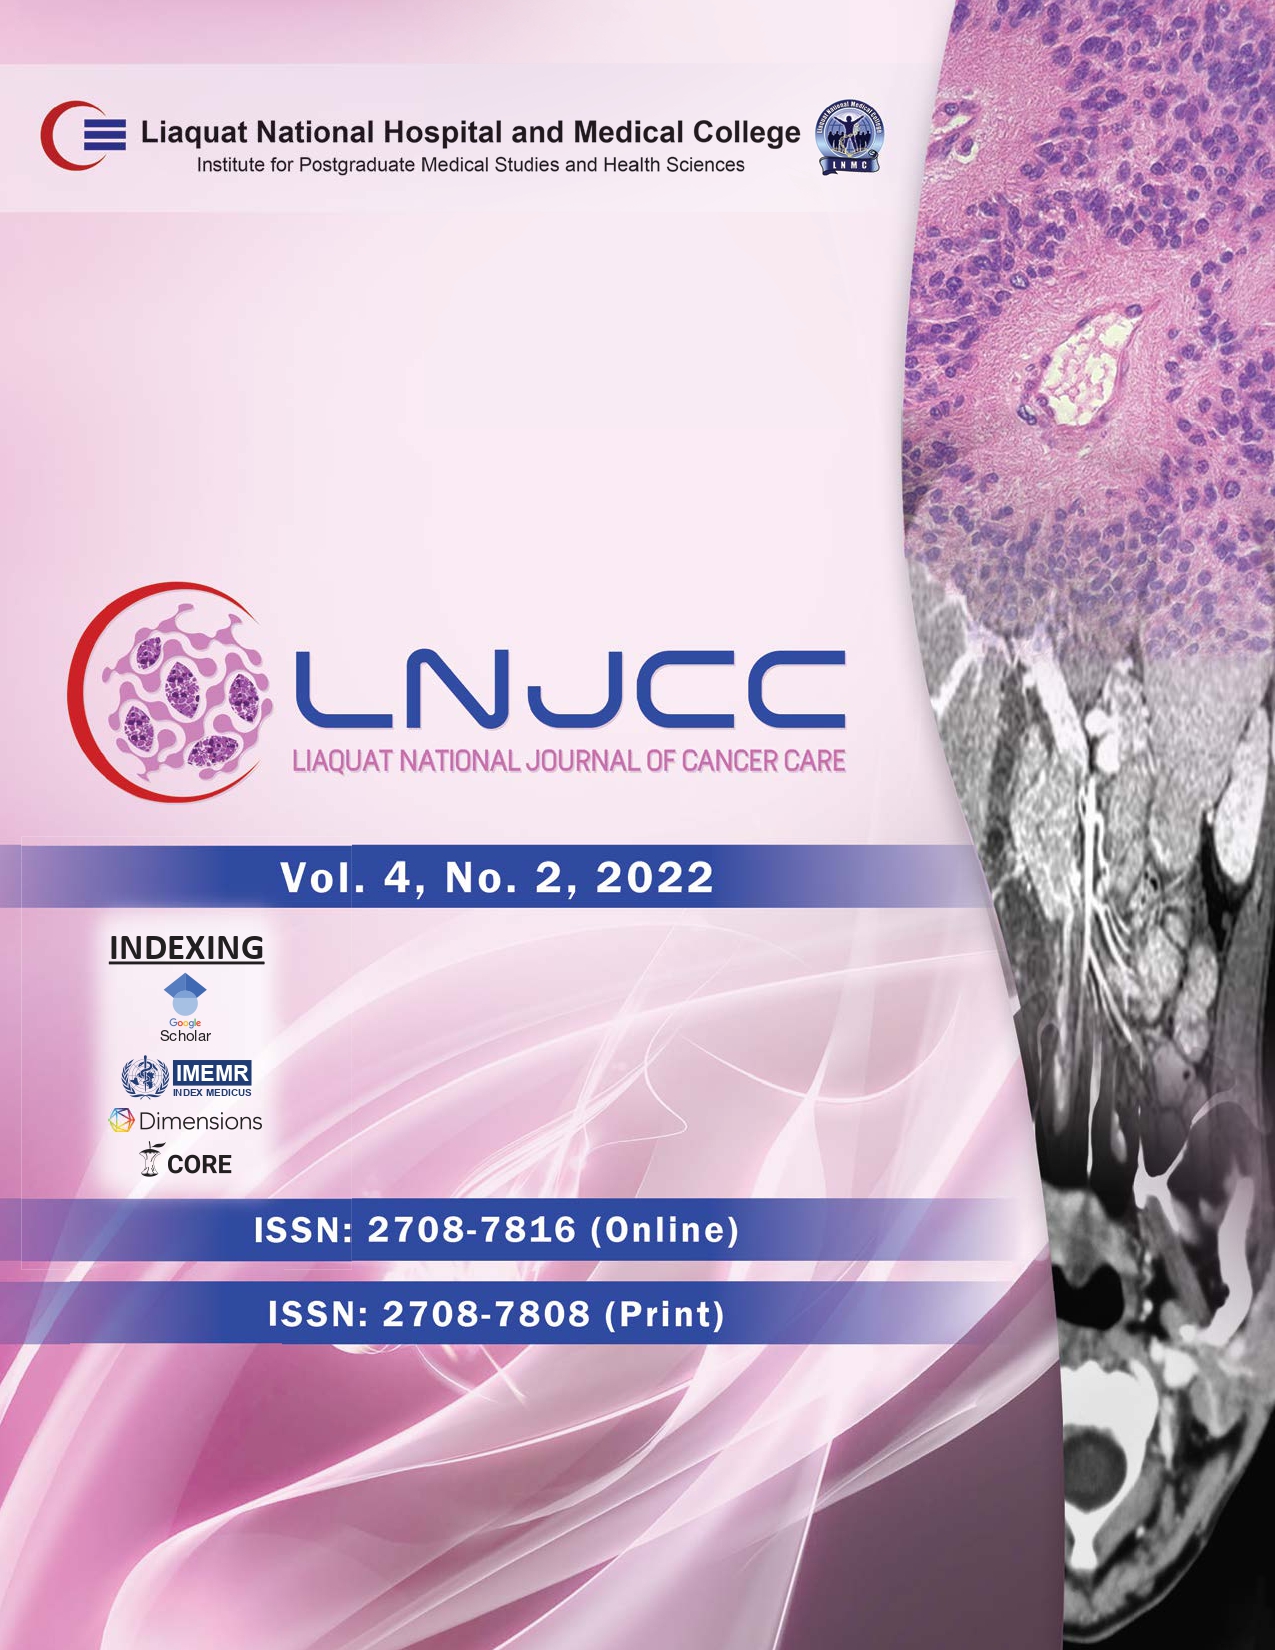 Liaquat National Journal of Cancer Care (LNJCC)